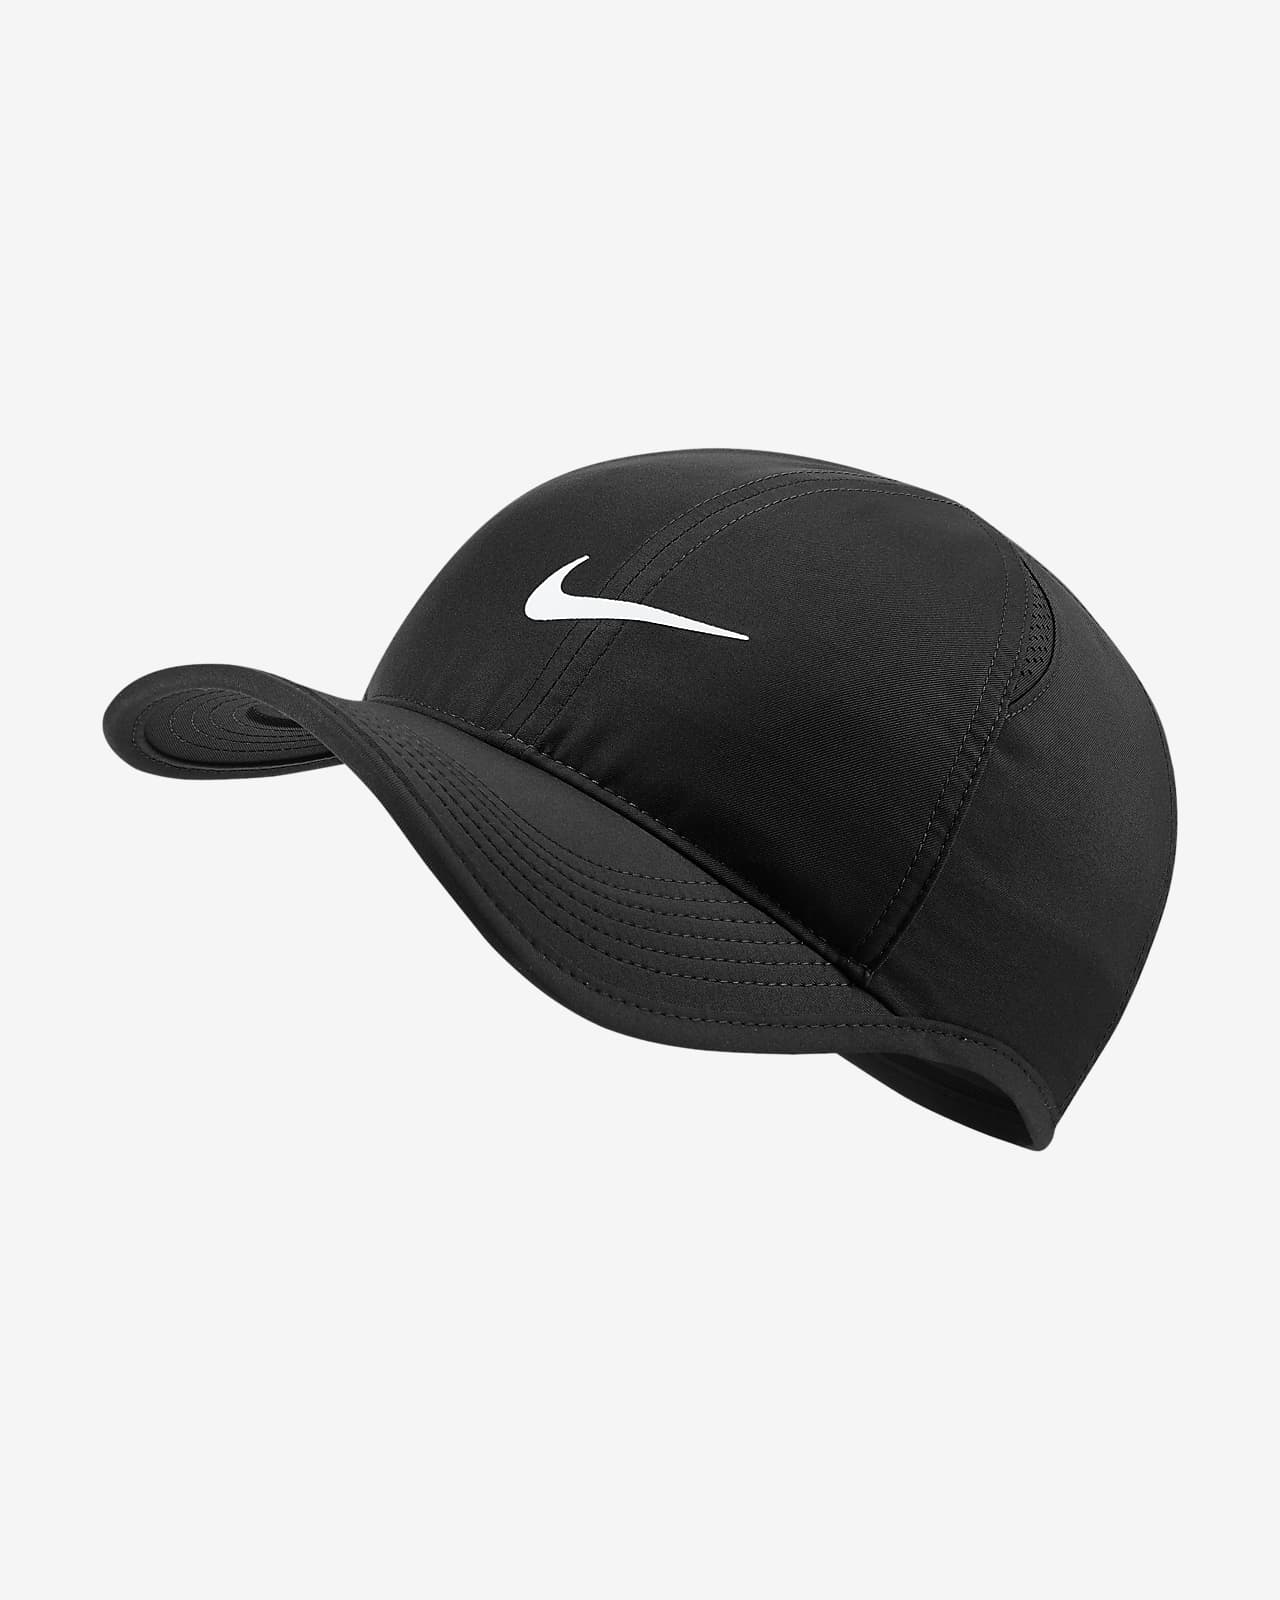 plain black nike hat